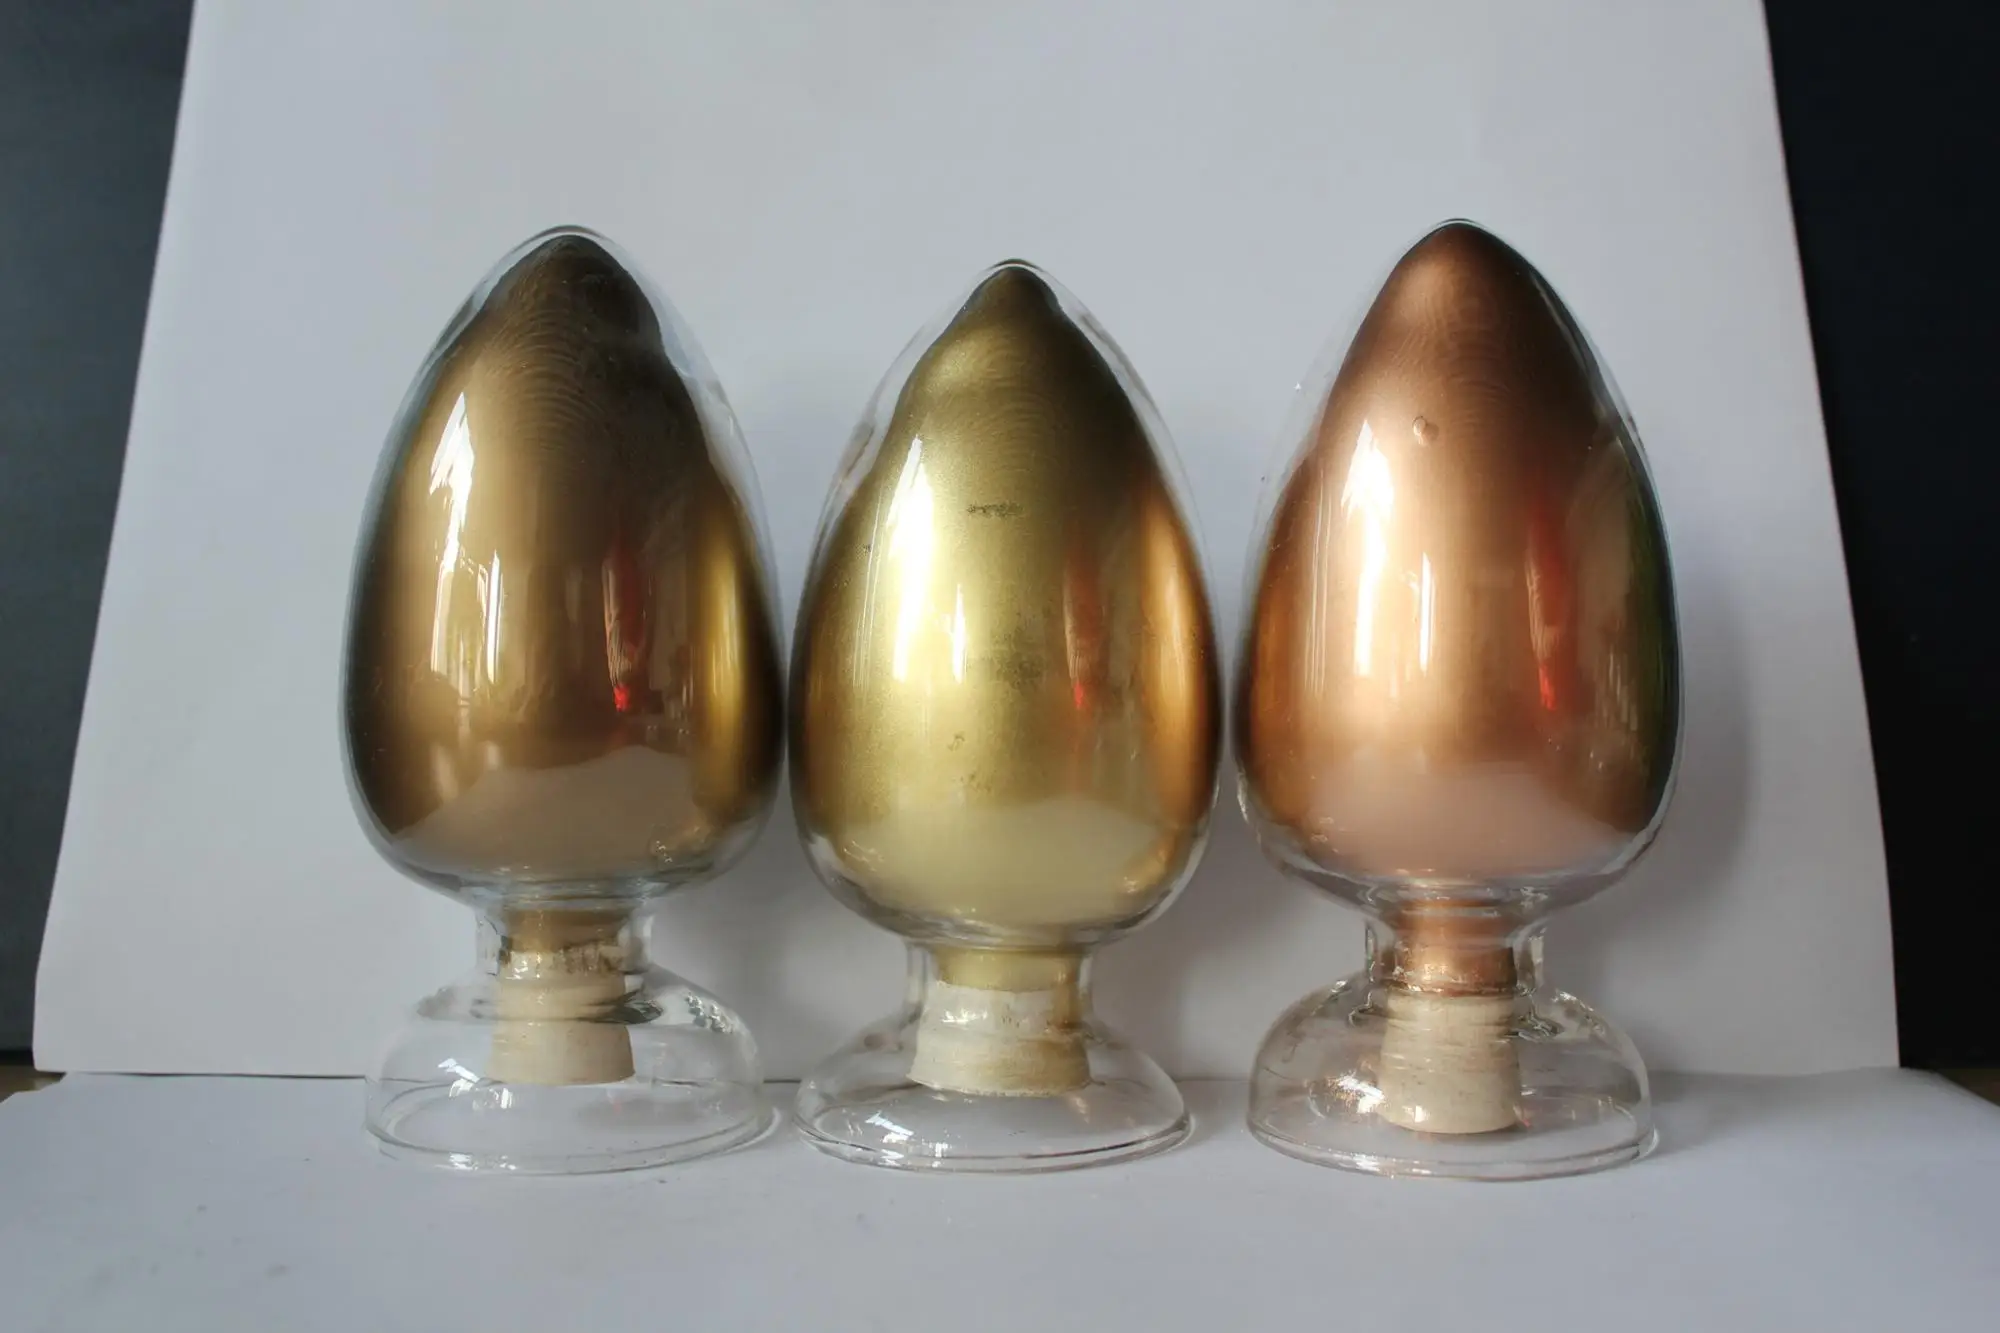 Rich Gold Pigment Bronze Metal Powder - China Bronze Powder, Metal Powder